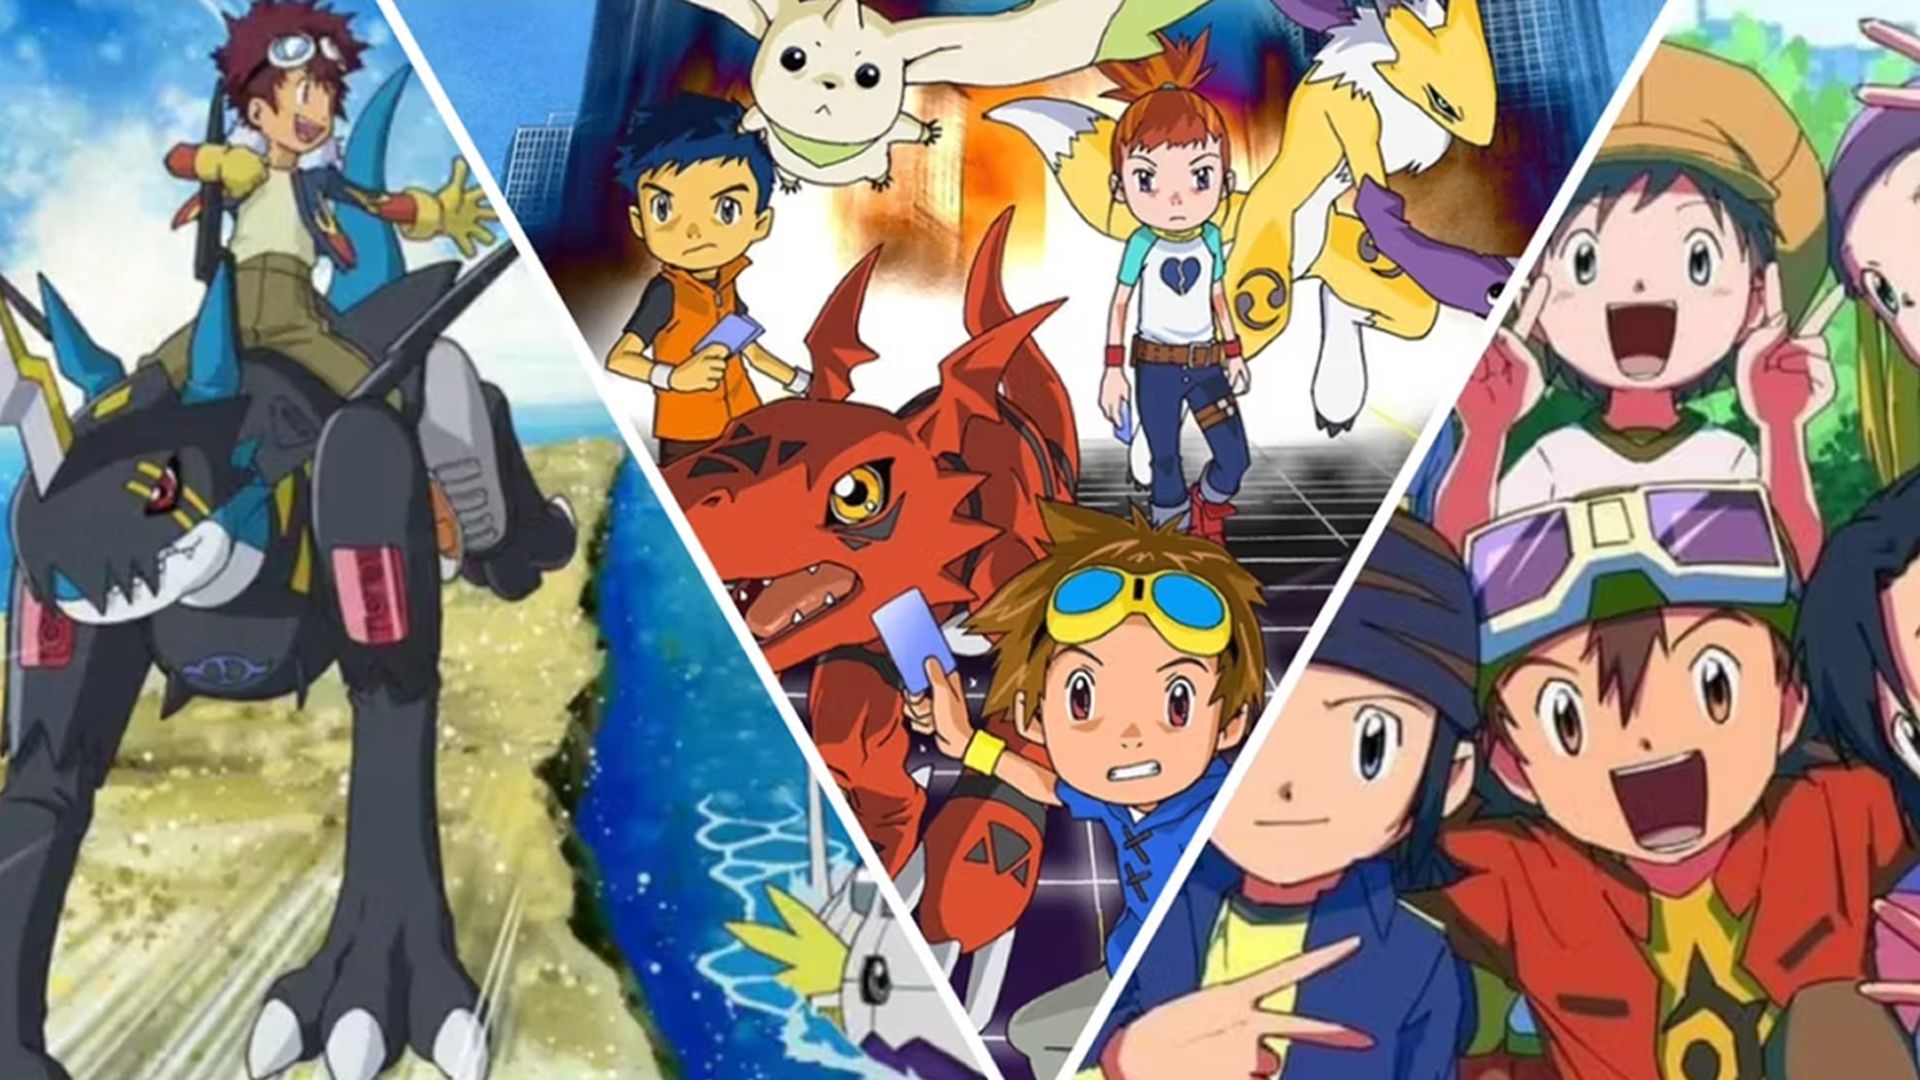 Split Images of Digimon Season 2, Season 3, and Season 4